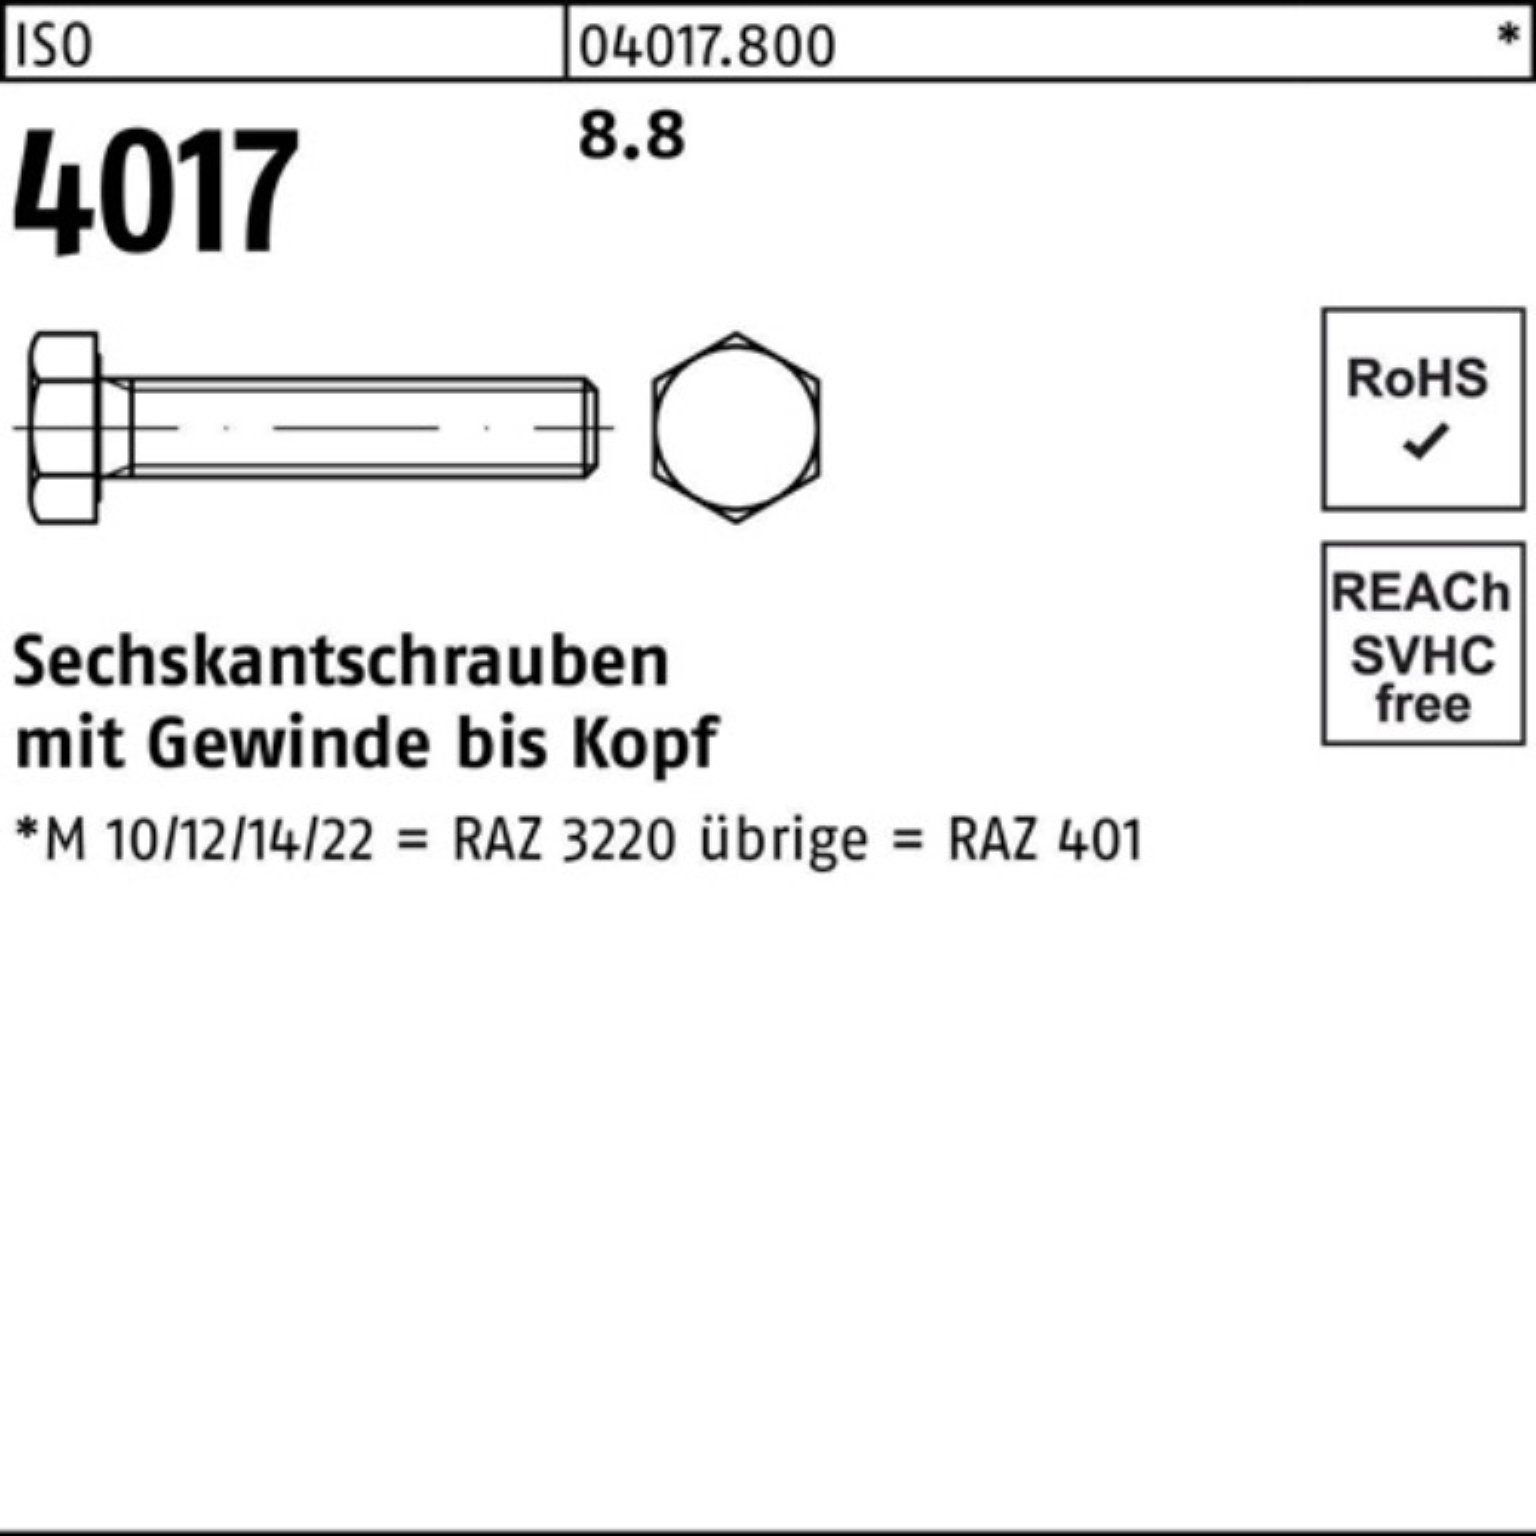 Pack VG M16x 25 Sechskantschraube 8.8 ISO Stück 80 Bufab 100er 401 Sechskantschraube 4017 ISO